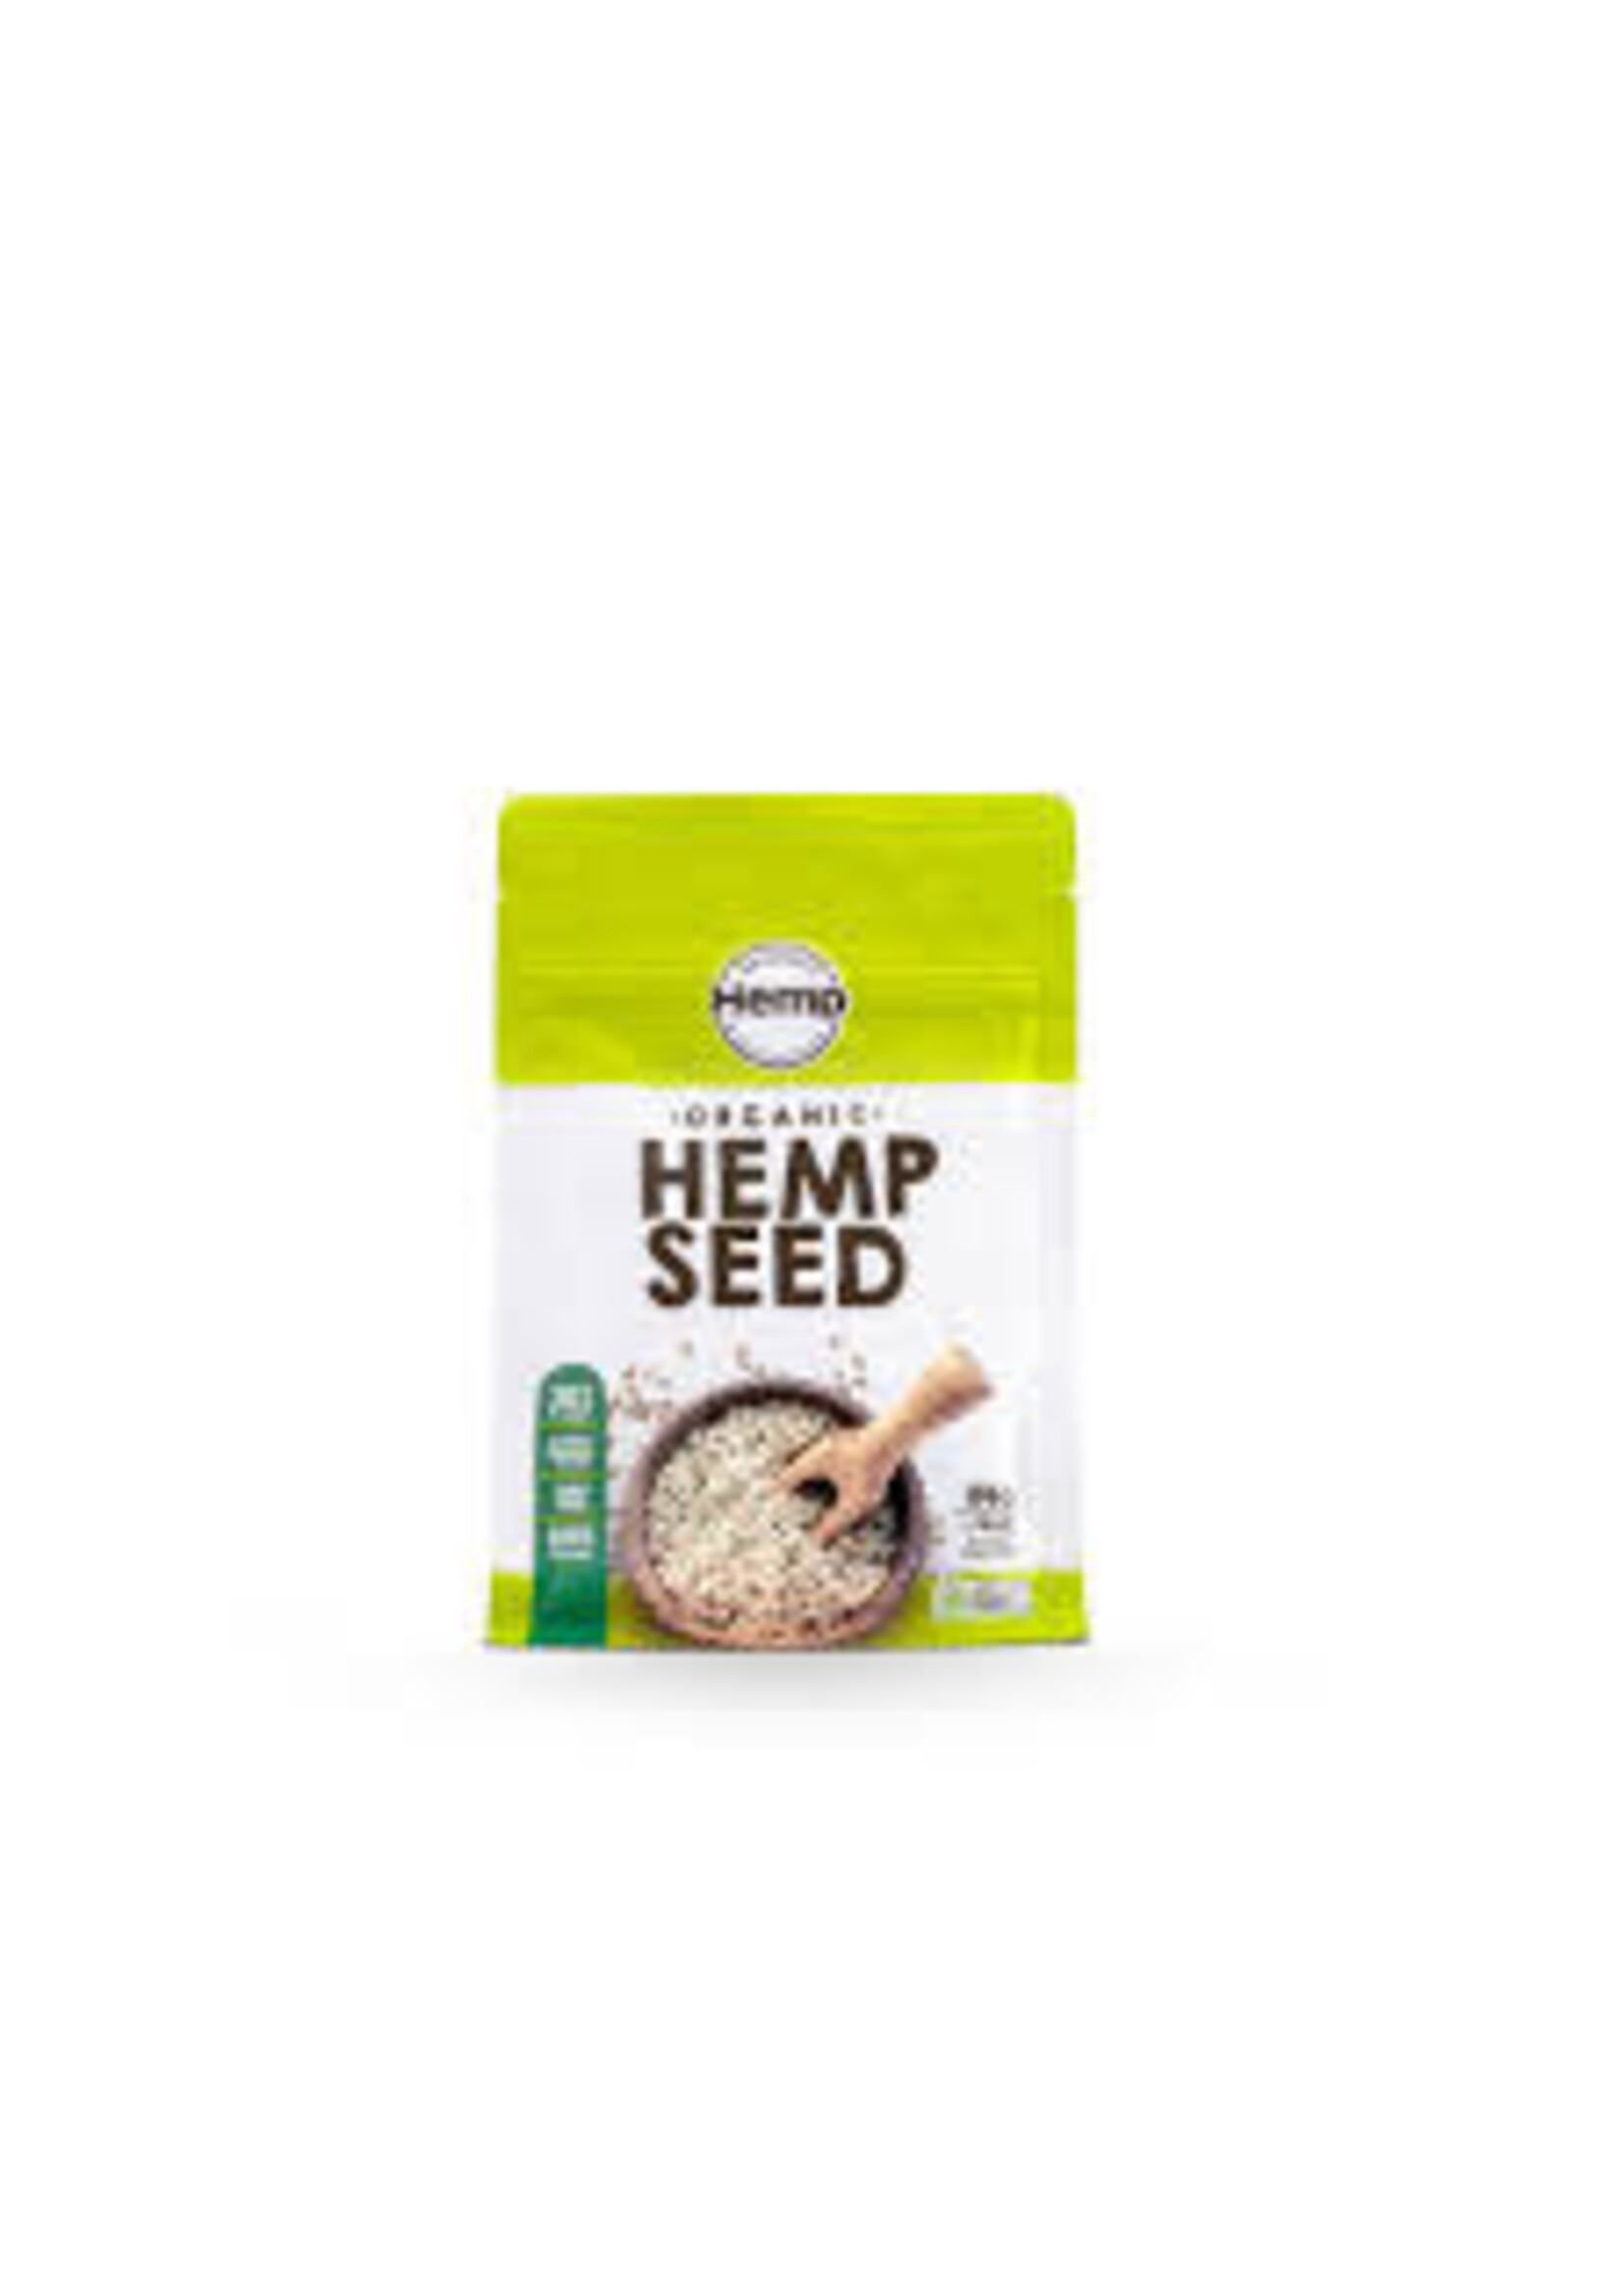 Hemp Foods Australia ( Essential Hemp) Hemp Foods Australia Essential Hemp 200gms hulled